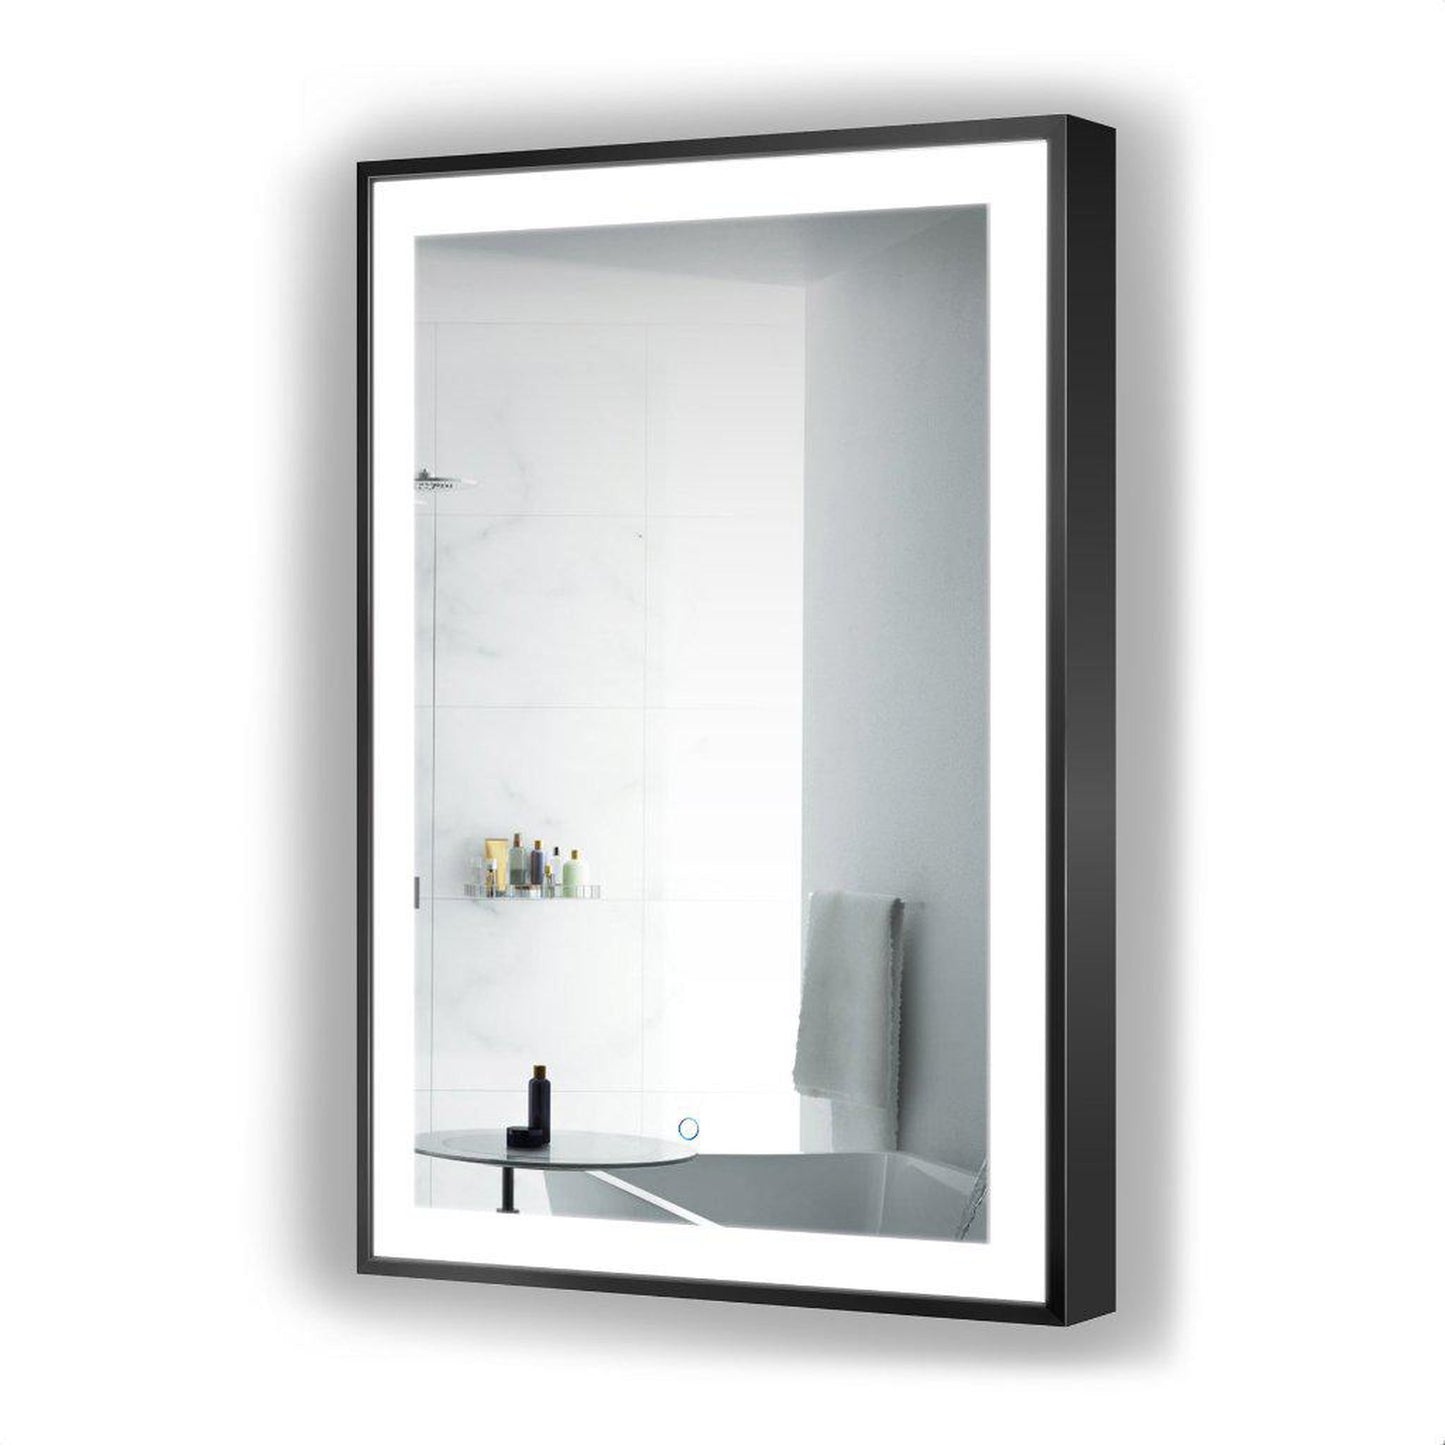 Krugg Reflections Soho 24" x 36" 5000K Rectangular Matte Black Wall-Mounted Framed LED Bathroom Vanity Mirror With Built-in Defogger and Dimmer